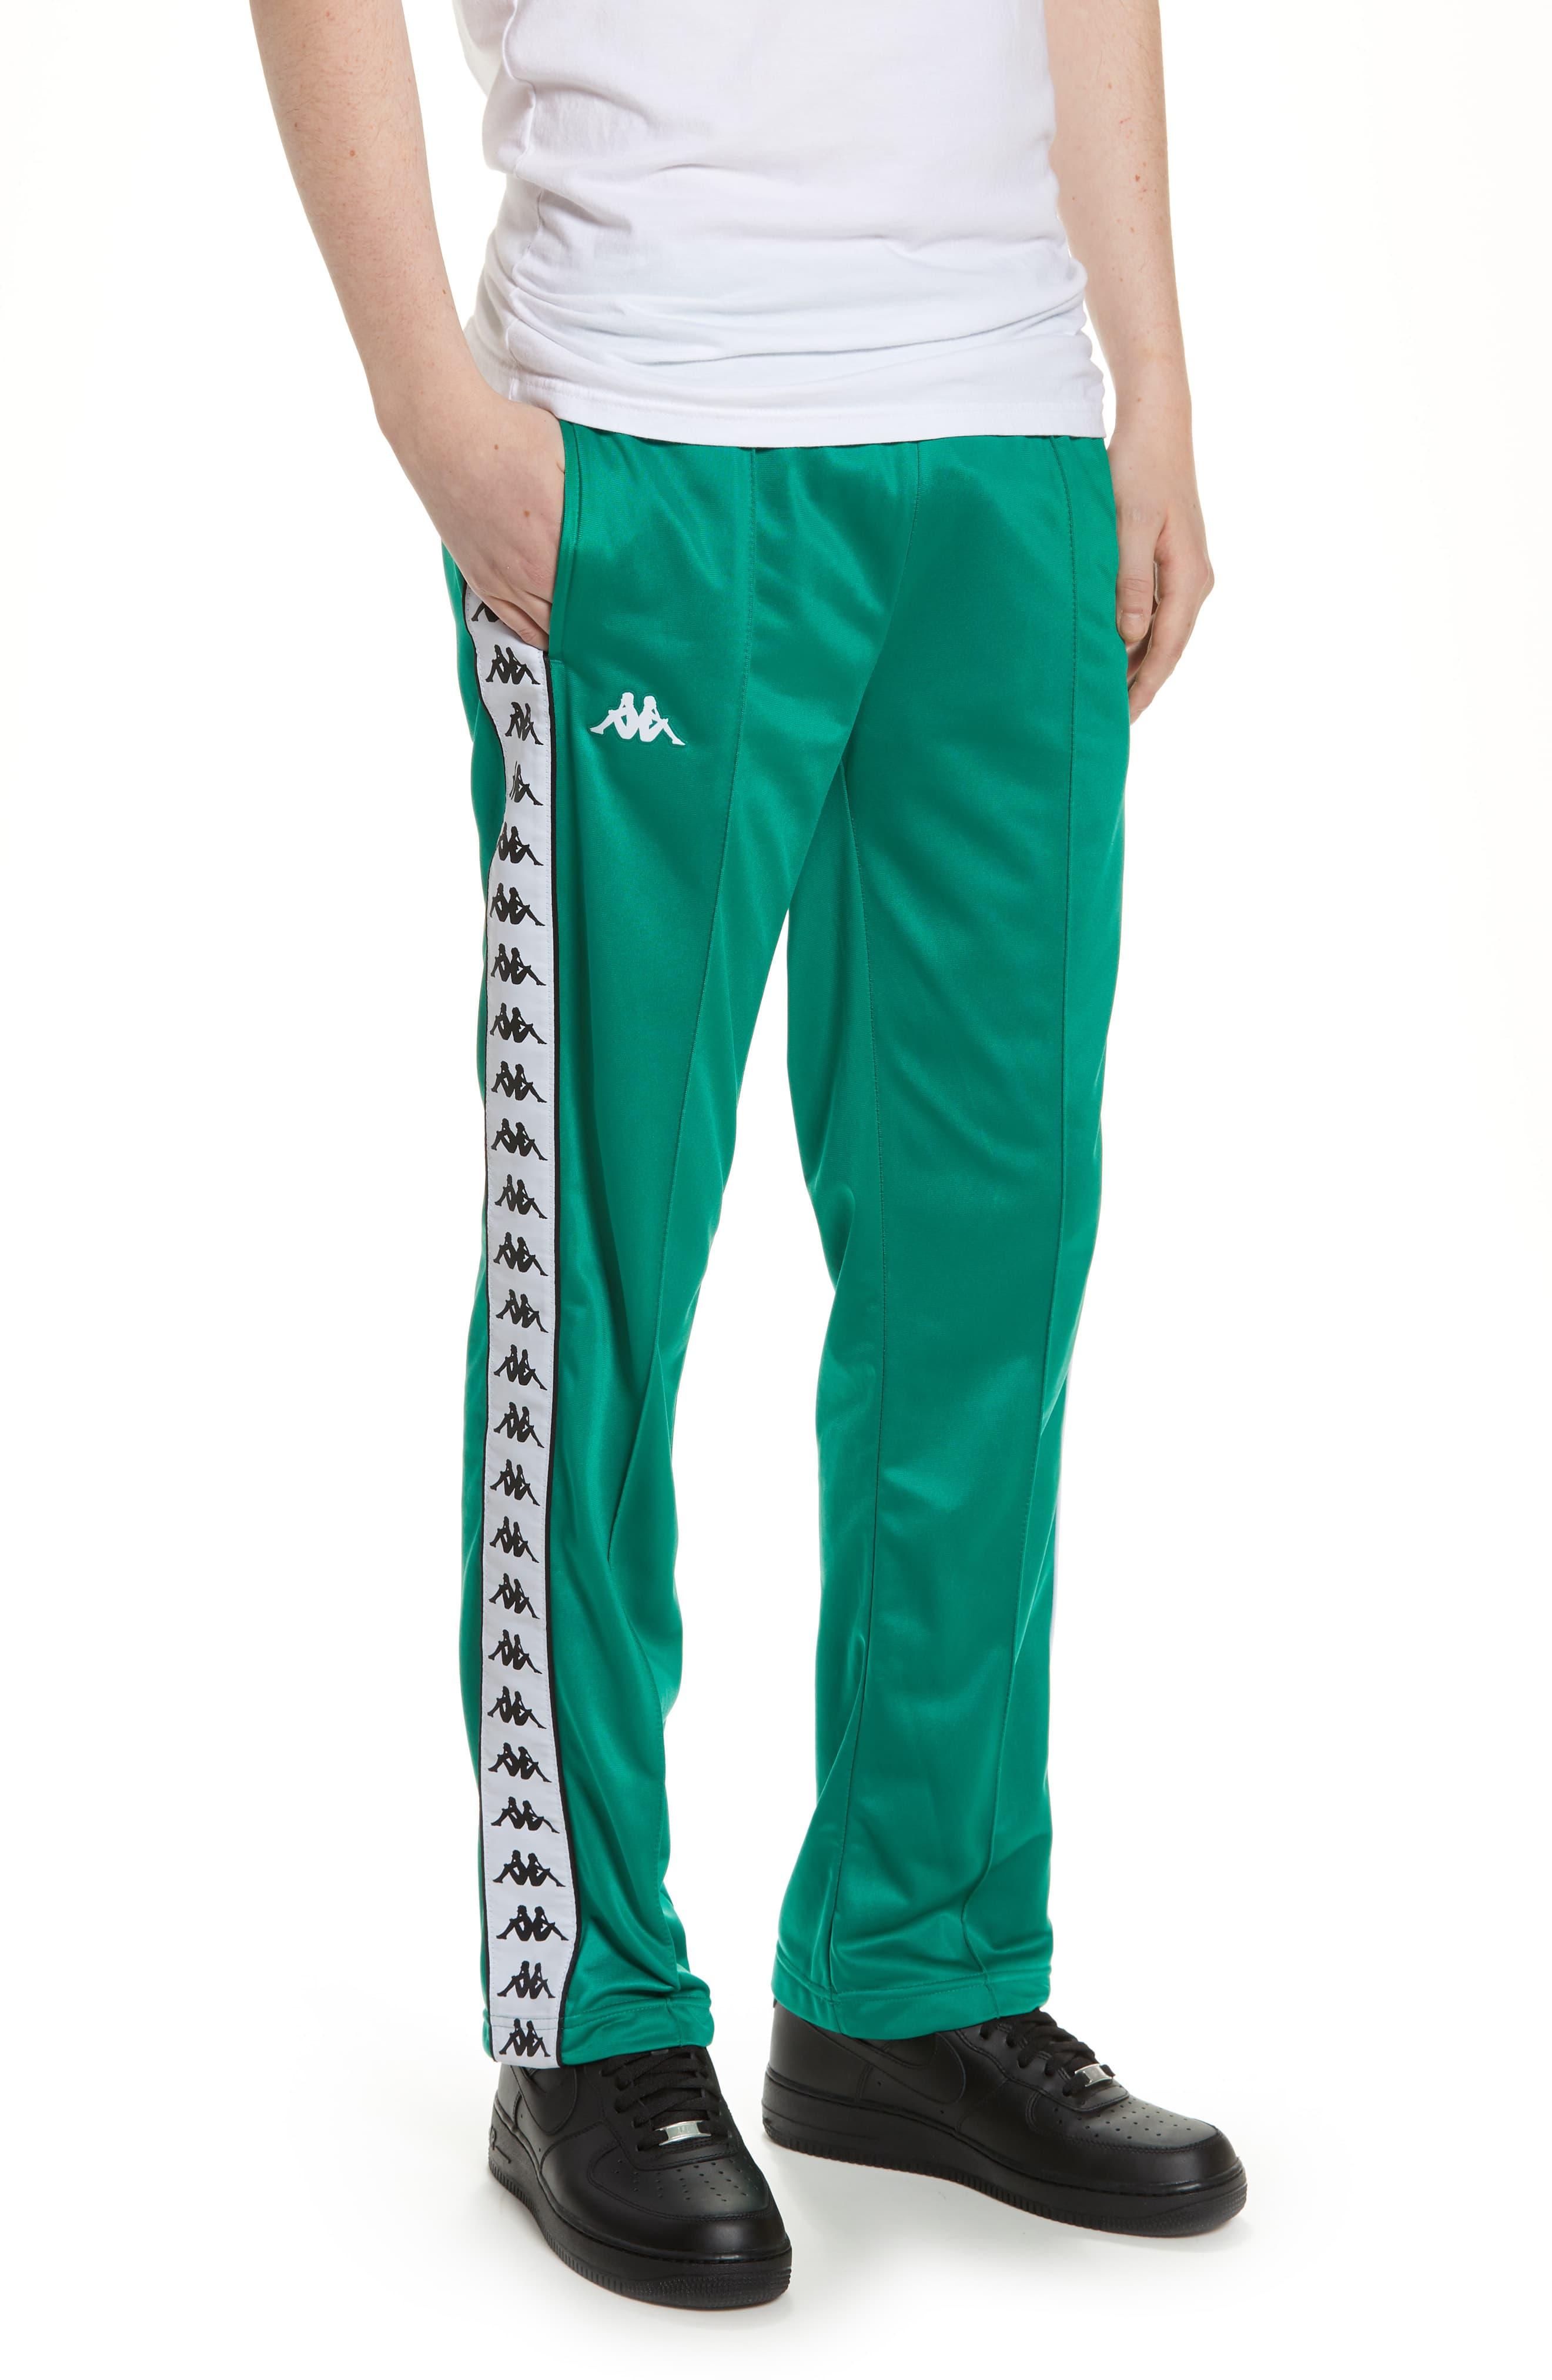 Kappa Active 222 Banda Astoriazz Slim Fit Track Pants in Green/ Black/  White (Green) for Men - Lyst